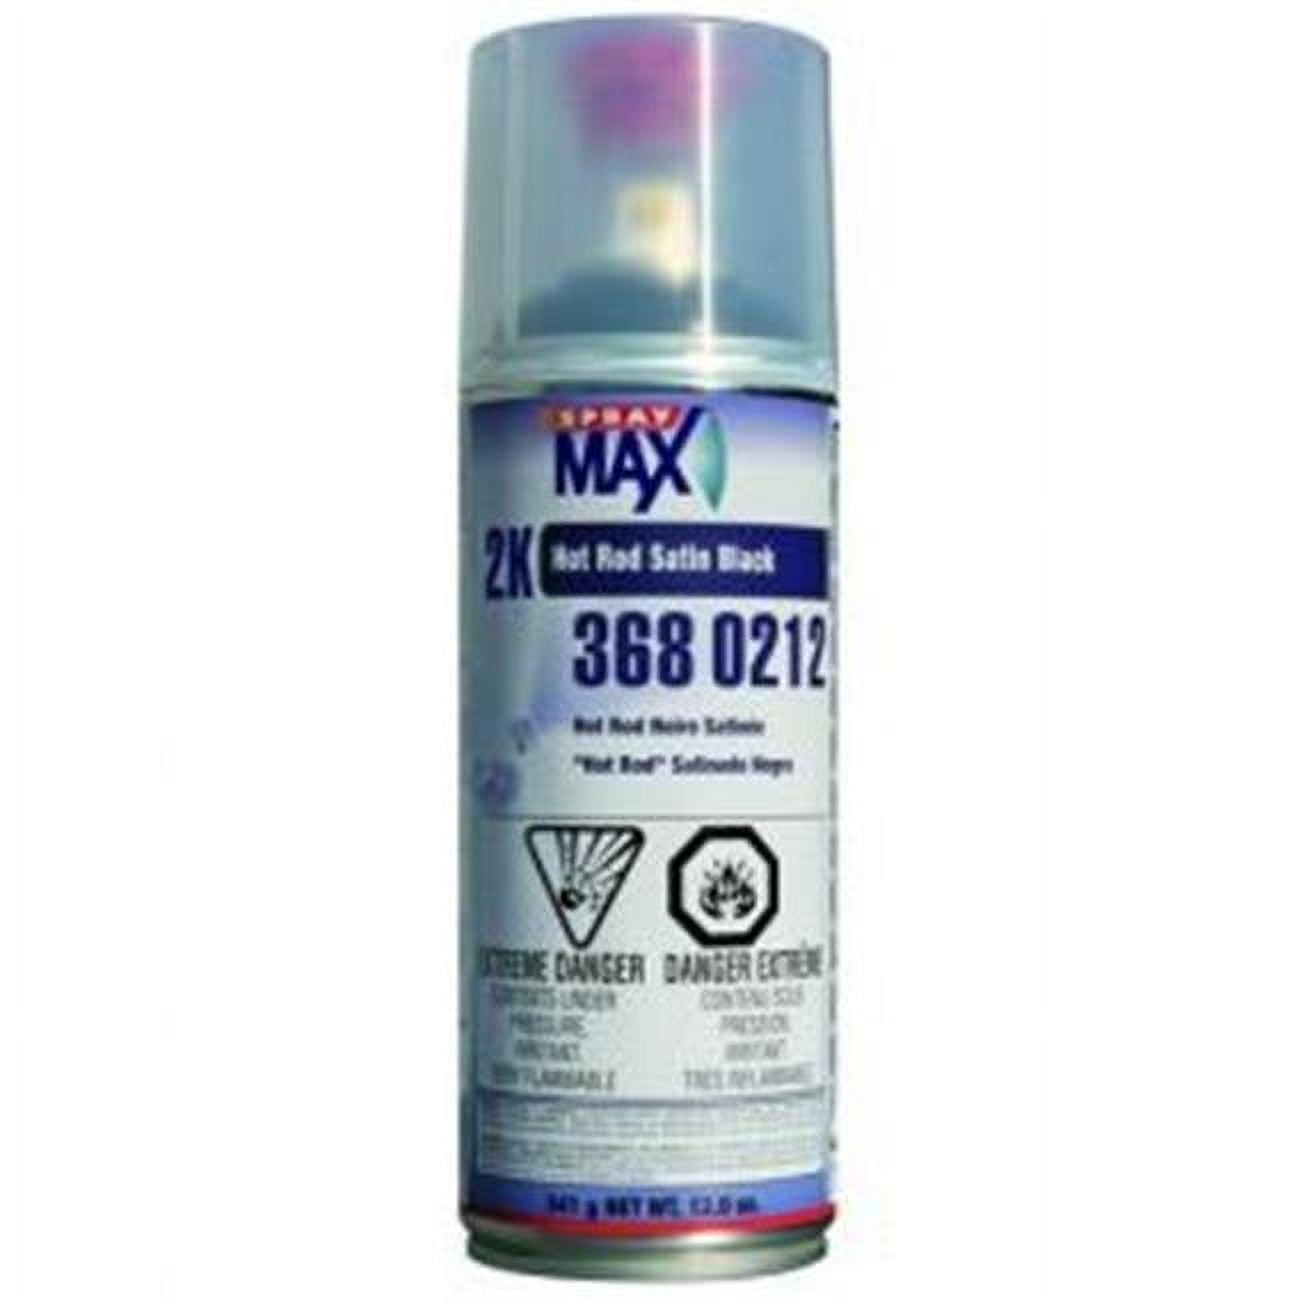 SprayMax 2K Hot Rod Satin Black Spray Paint, Automotive Topcoat With Long  La